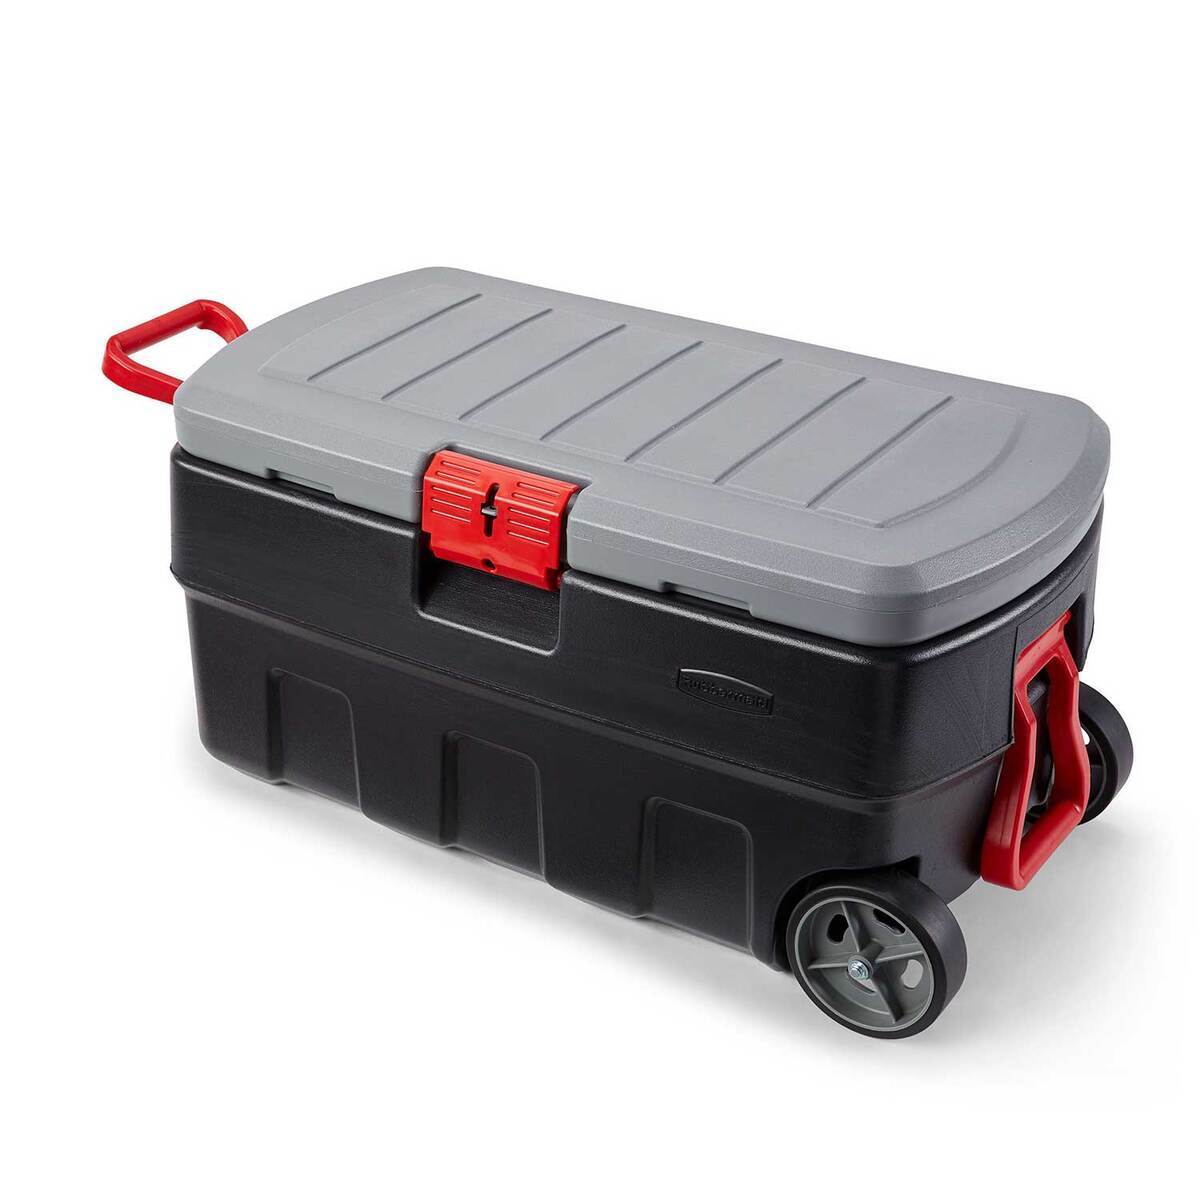 https://www.sportsmans.com/medias/rubbermaid-wheeled-action-packer-35-gallon-lockable-storage-box-1726145-1.jpg?context=bWFzdGVyfGltYWdlc3w2Njk3MnxpbWFnZS9qcGVnfGhiMS9oZTYvMTAzNTc3ODQwODQ1MTAvMTcyNjE0NS0xX2Jhc2UtY29udmVyc2lvbkZvcm1hdF8xMjAwLWNvbnZlcnNpb25Gb3JtYXR8MzdhMjQyMmRmNGU2YmMwNTljYmRhMjhkYTRmYWJhN2U1OTdjNjhiNmI3ZjhmZGRmNDNkZTkzZmMwOWVlYzQ3Mg